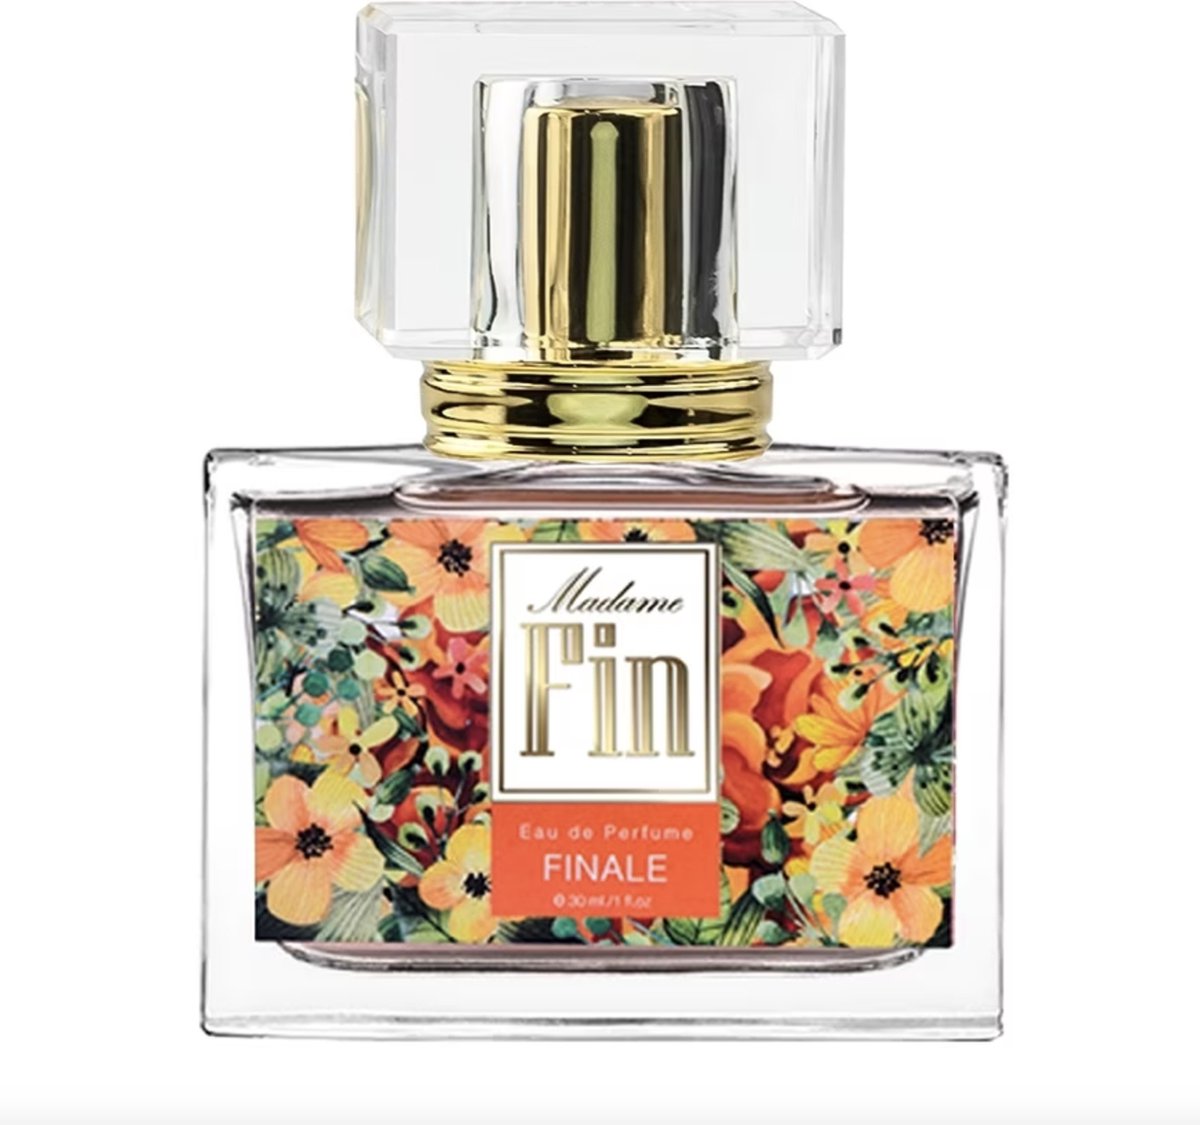 Madame Fin Perfume 30ml. Finale